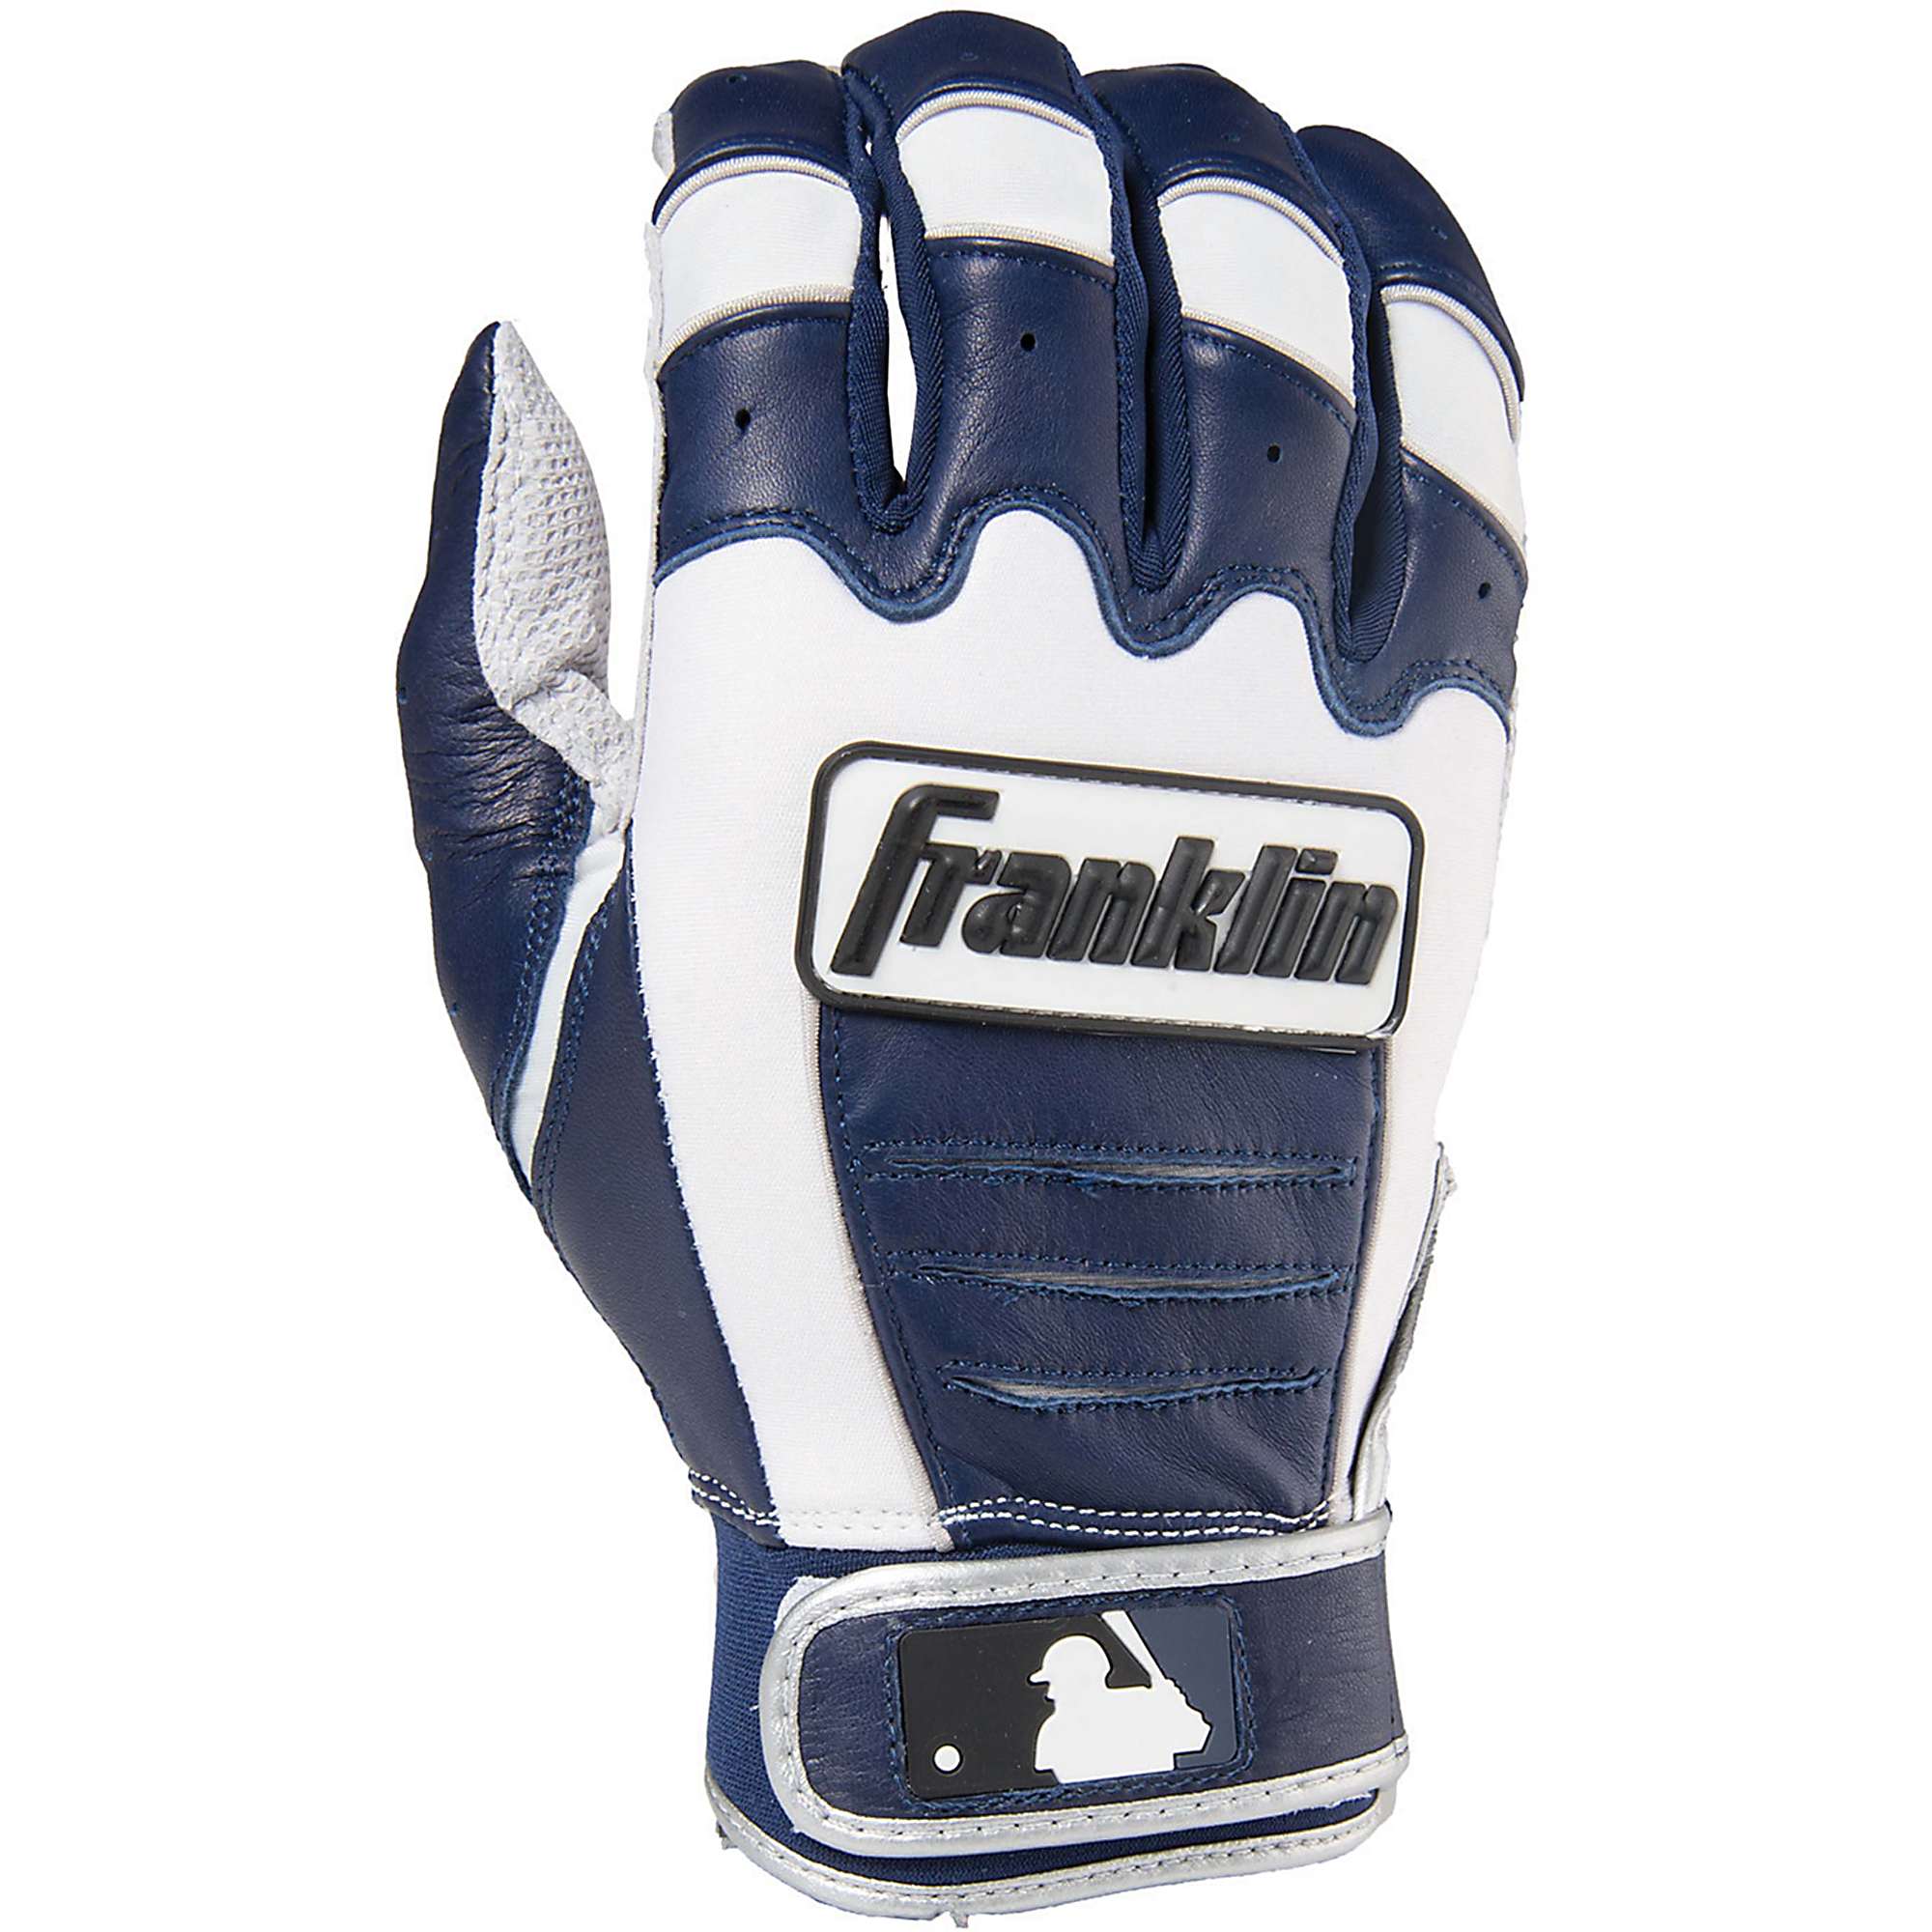 Franklin Men's Cfx Pro Batting Glove | eBay